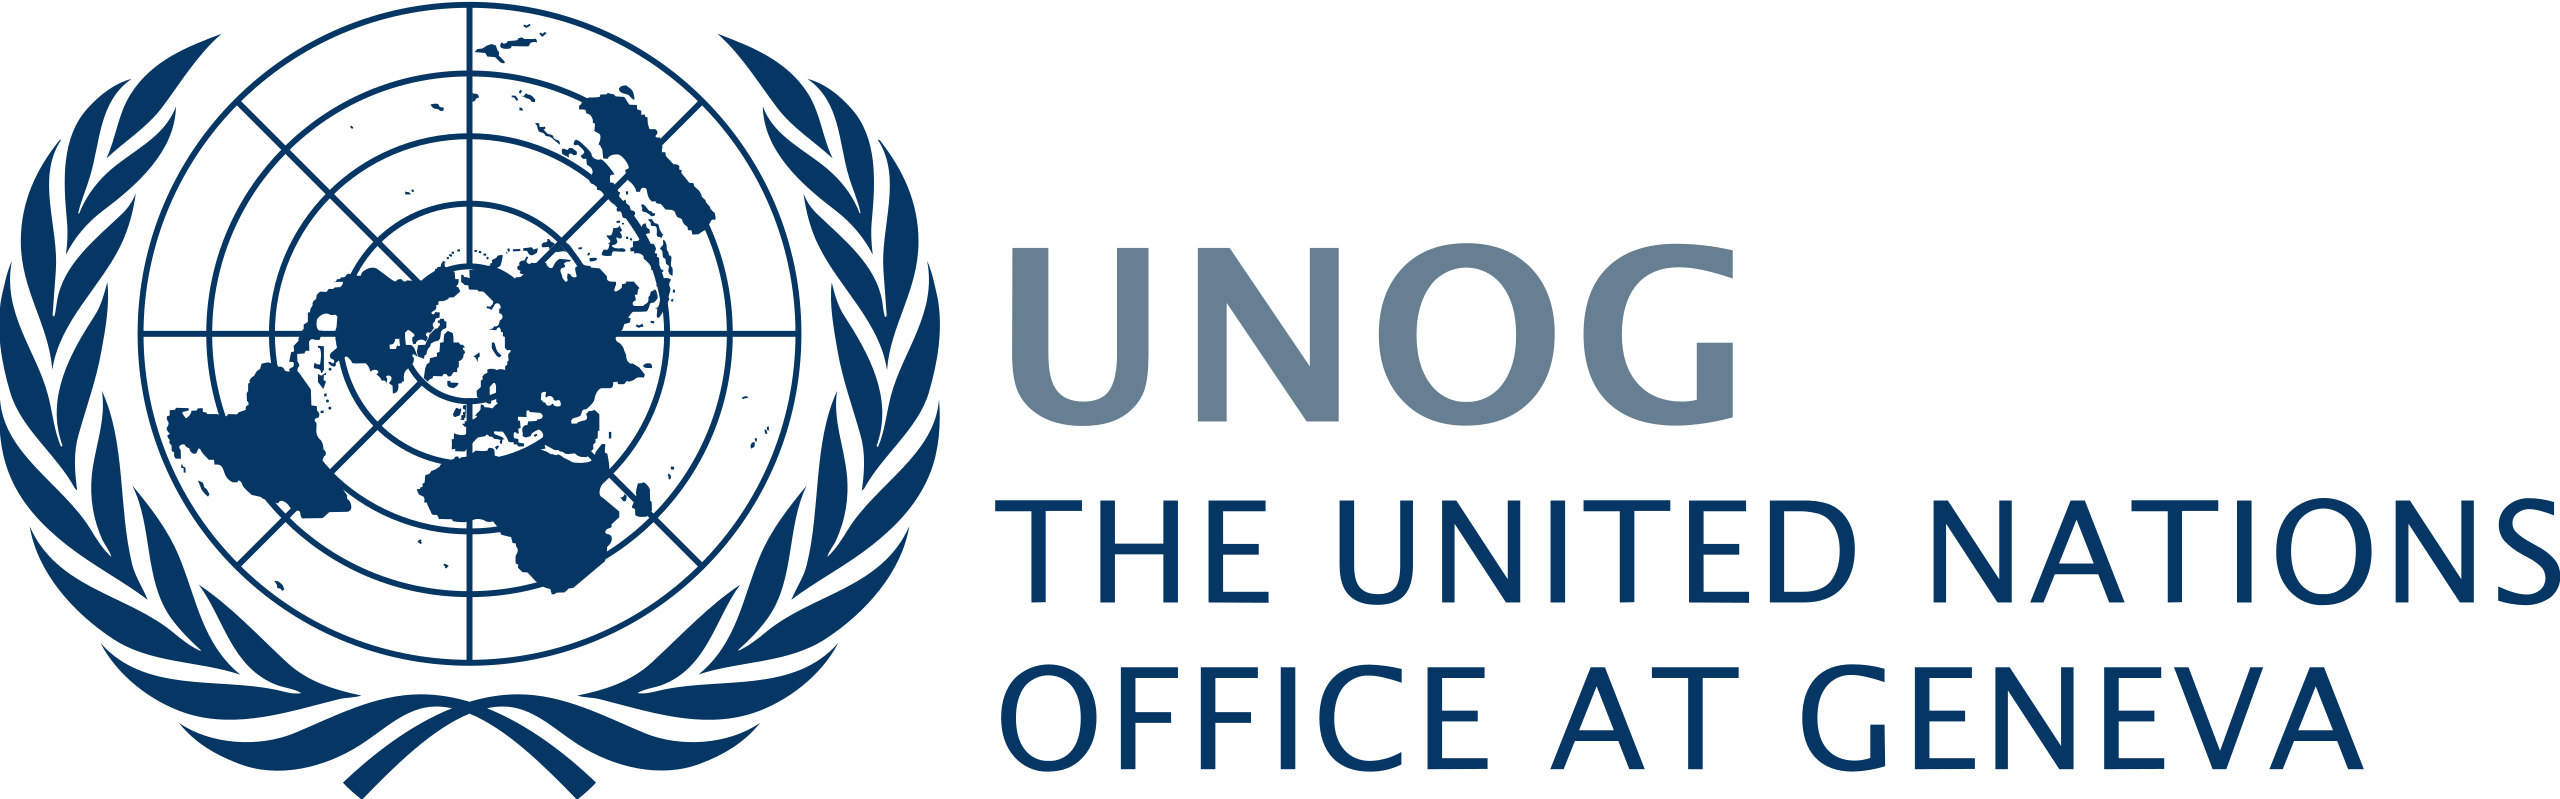 United Nations Office at Geneva - GIPLATFORM